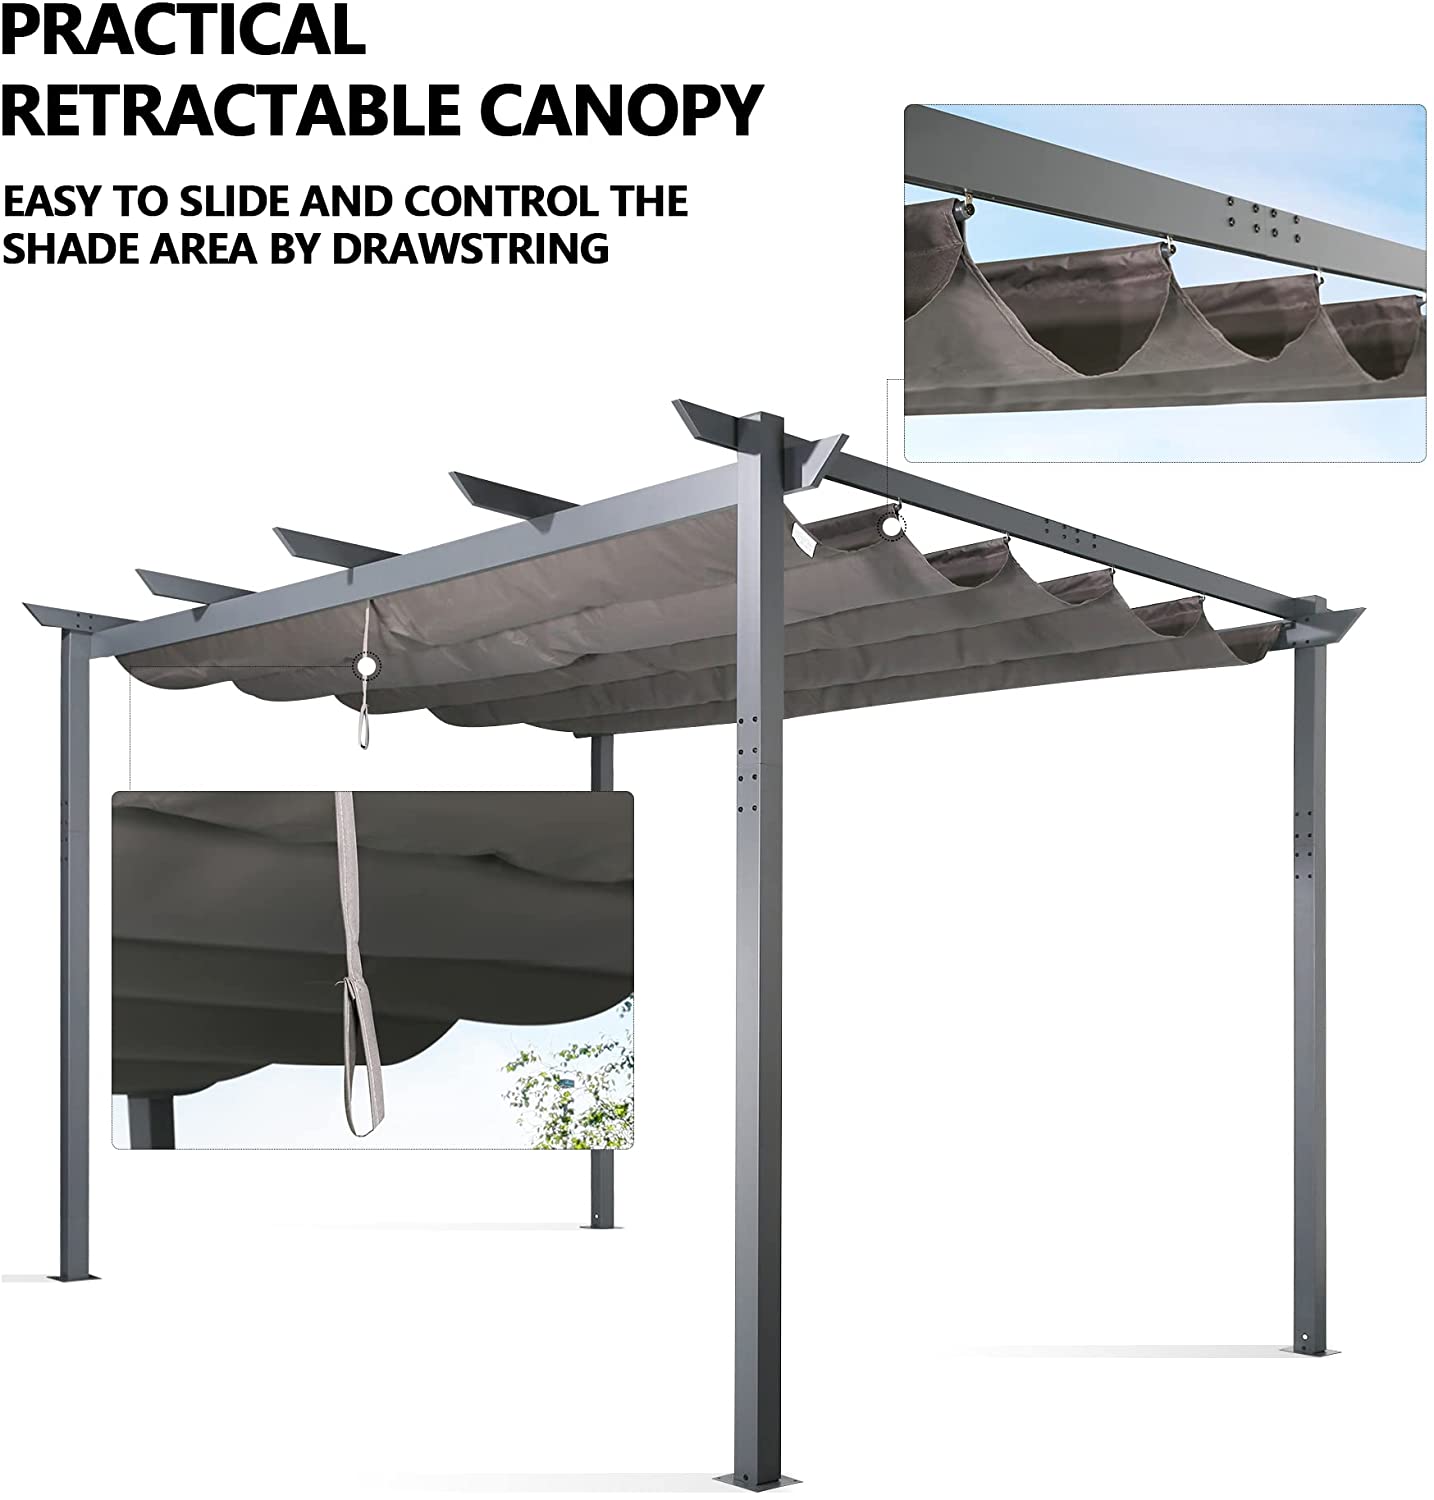 10'x13' Outdoor Pergola Aluminum Patio Retractable Gazebo with Sun Shade Canopy (Gray)